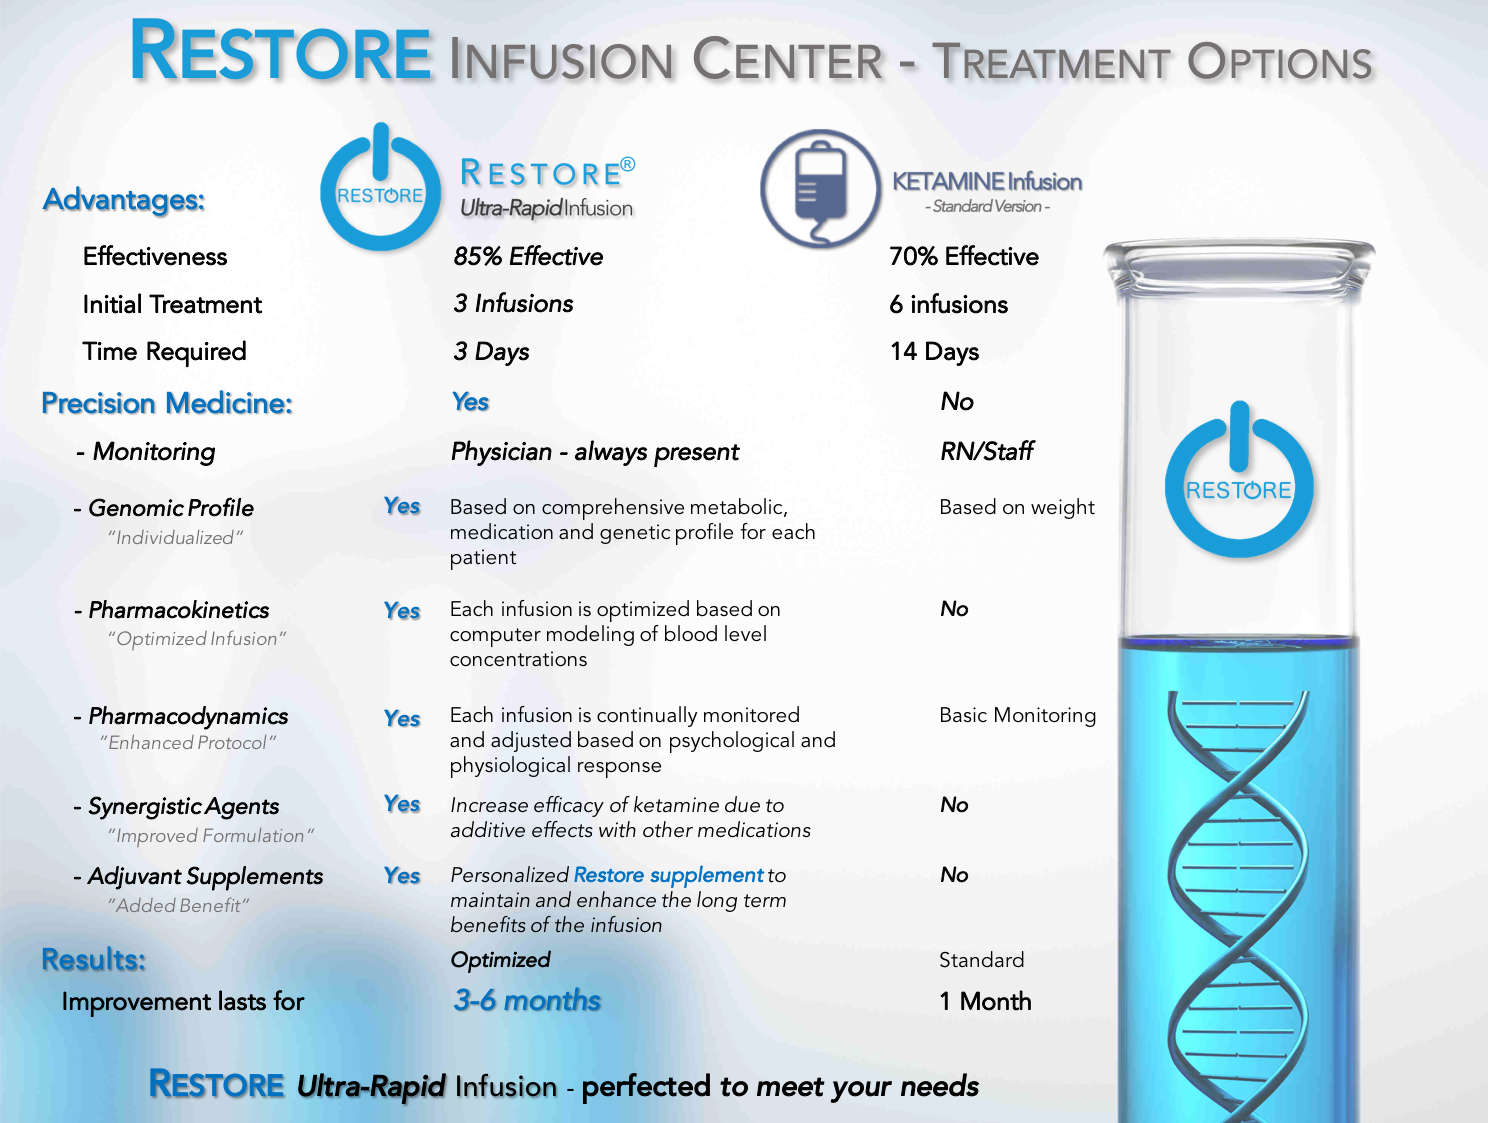 Restore versus the Standard ketamine infusion